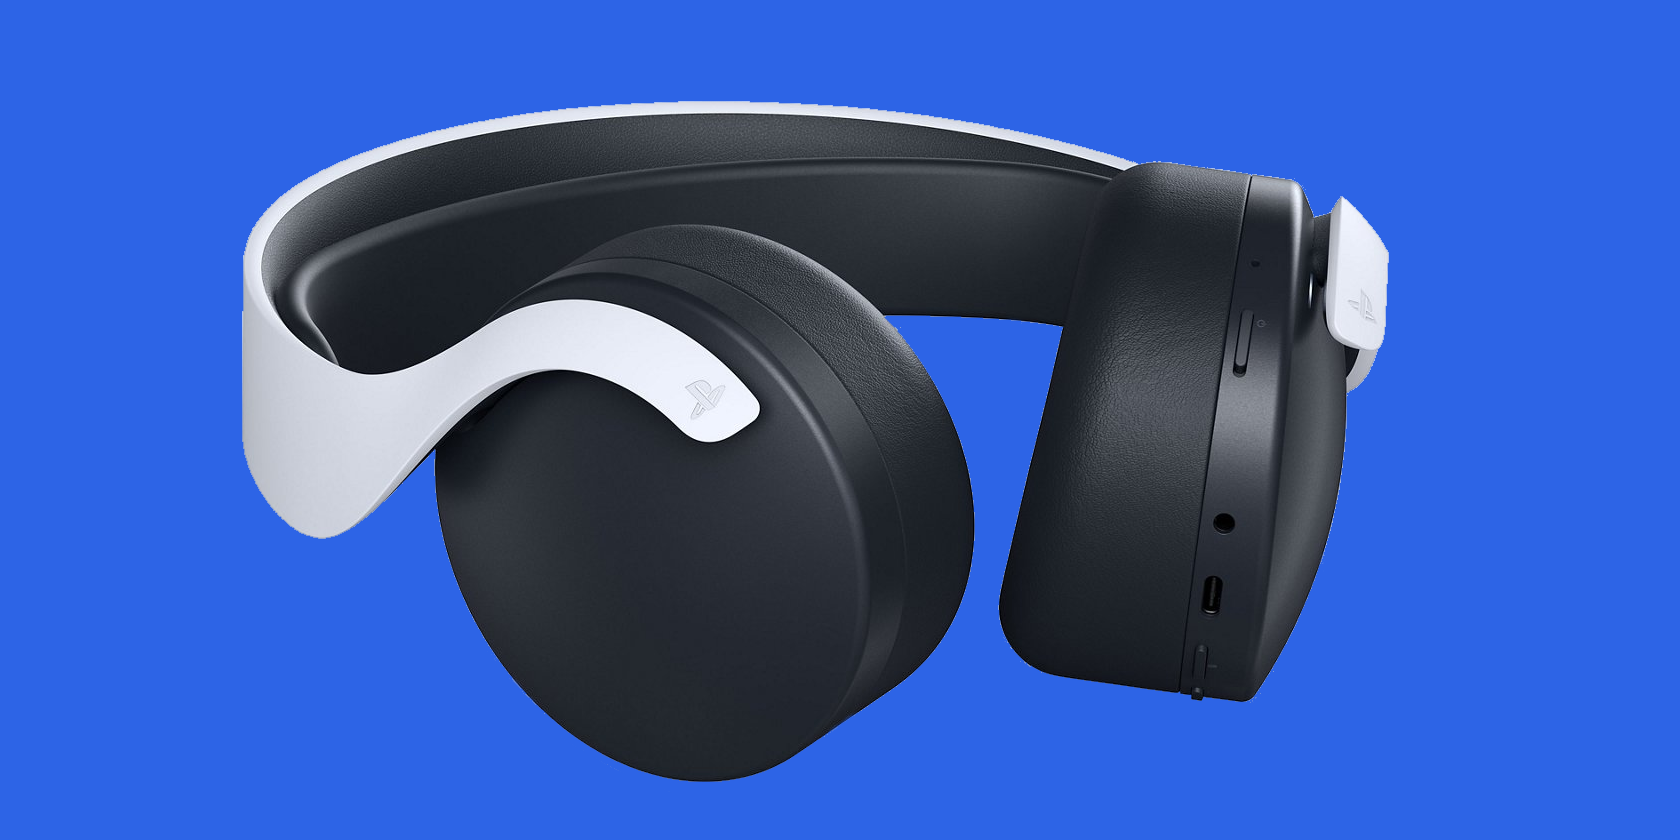 ps5 pulse 3d headset set against a blue background